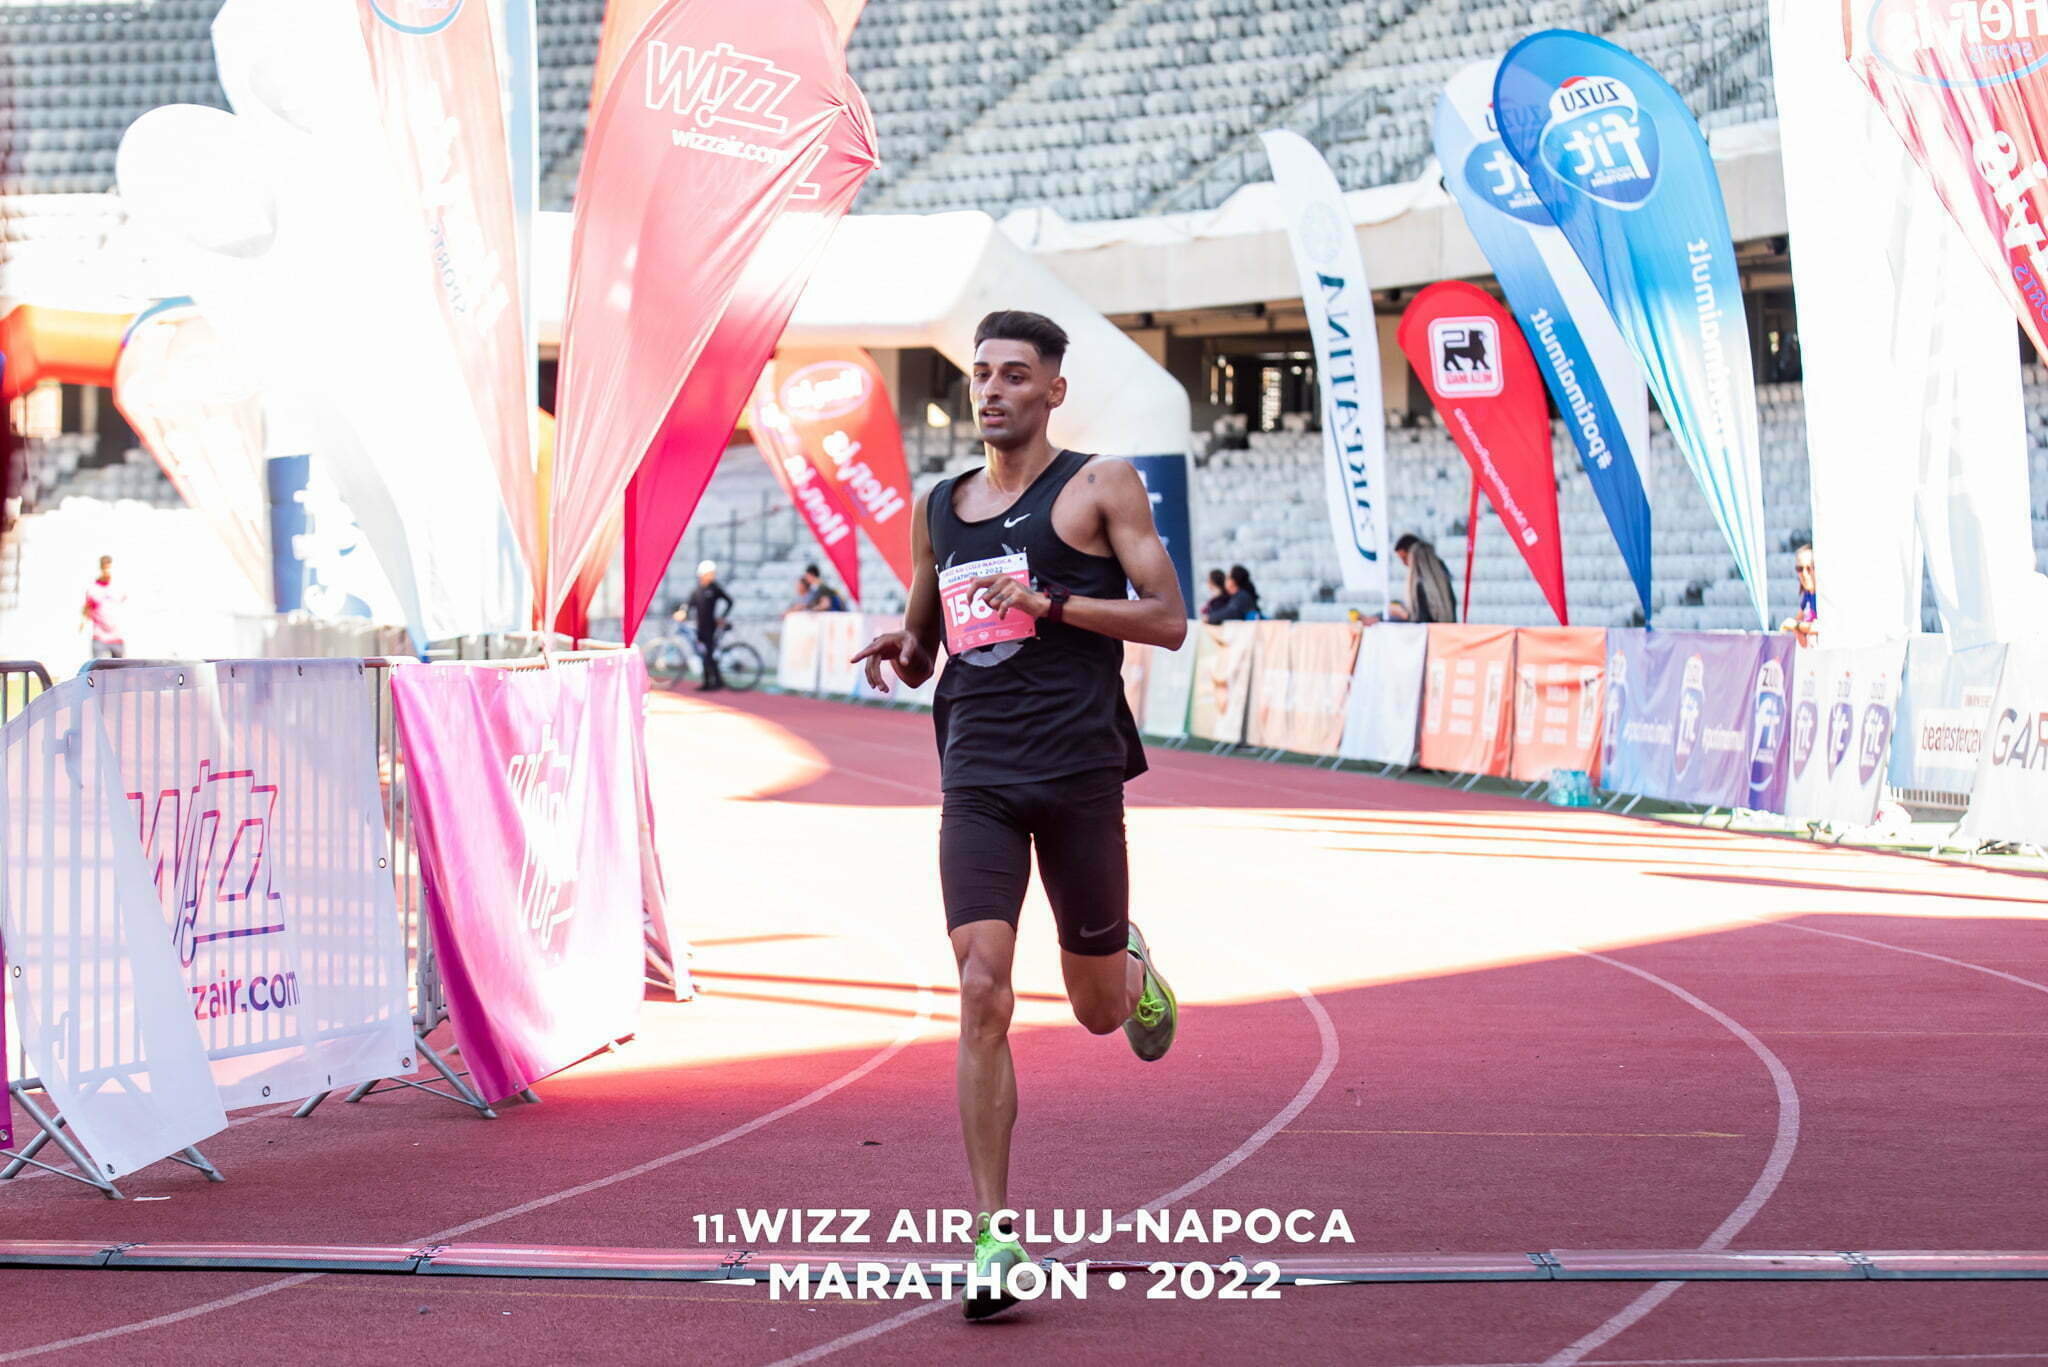 Două recorduri doborâte la probele de maraton și semimaraton de la Wizz Air Cluj-Napoca International Marathon 2022